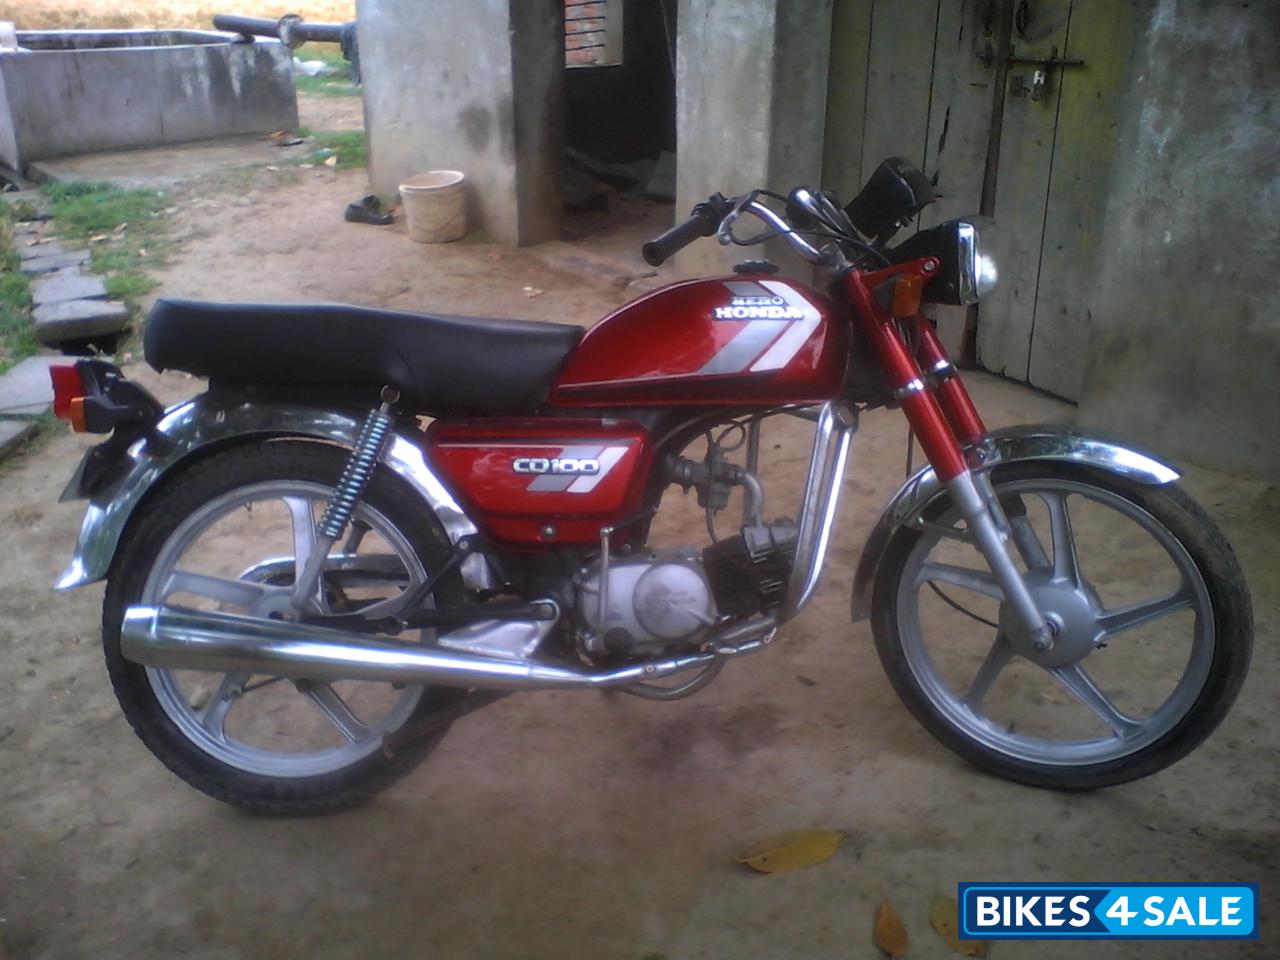 Used 19 Model Hero Cd 100 For Sale In Yamunanagar Id Bikes4sale